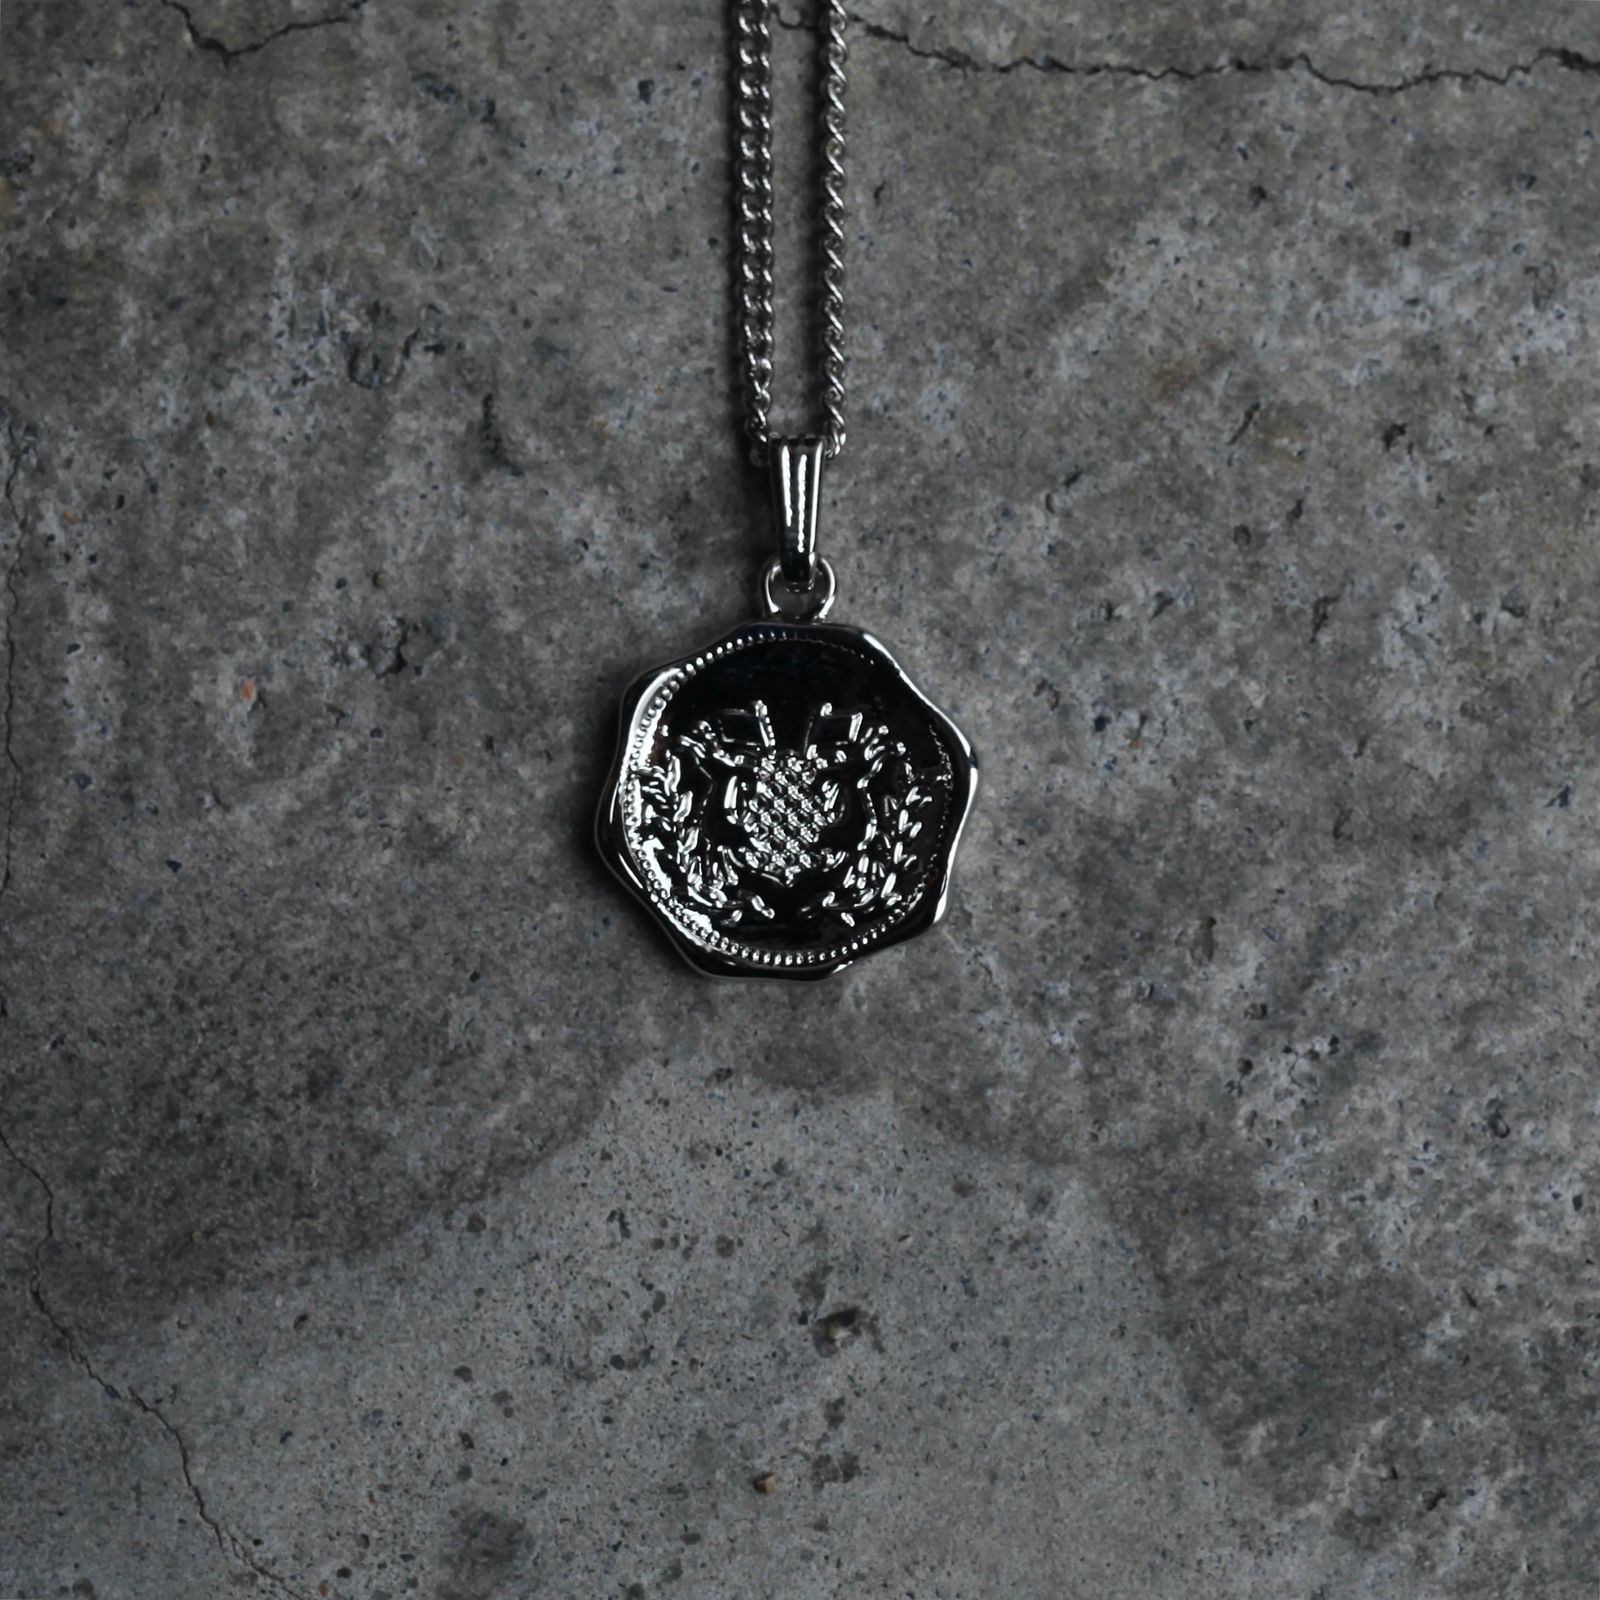 Taiga Igari - 【残り一点】Sealing Necklace | ACRMTSM ONLINE STORE